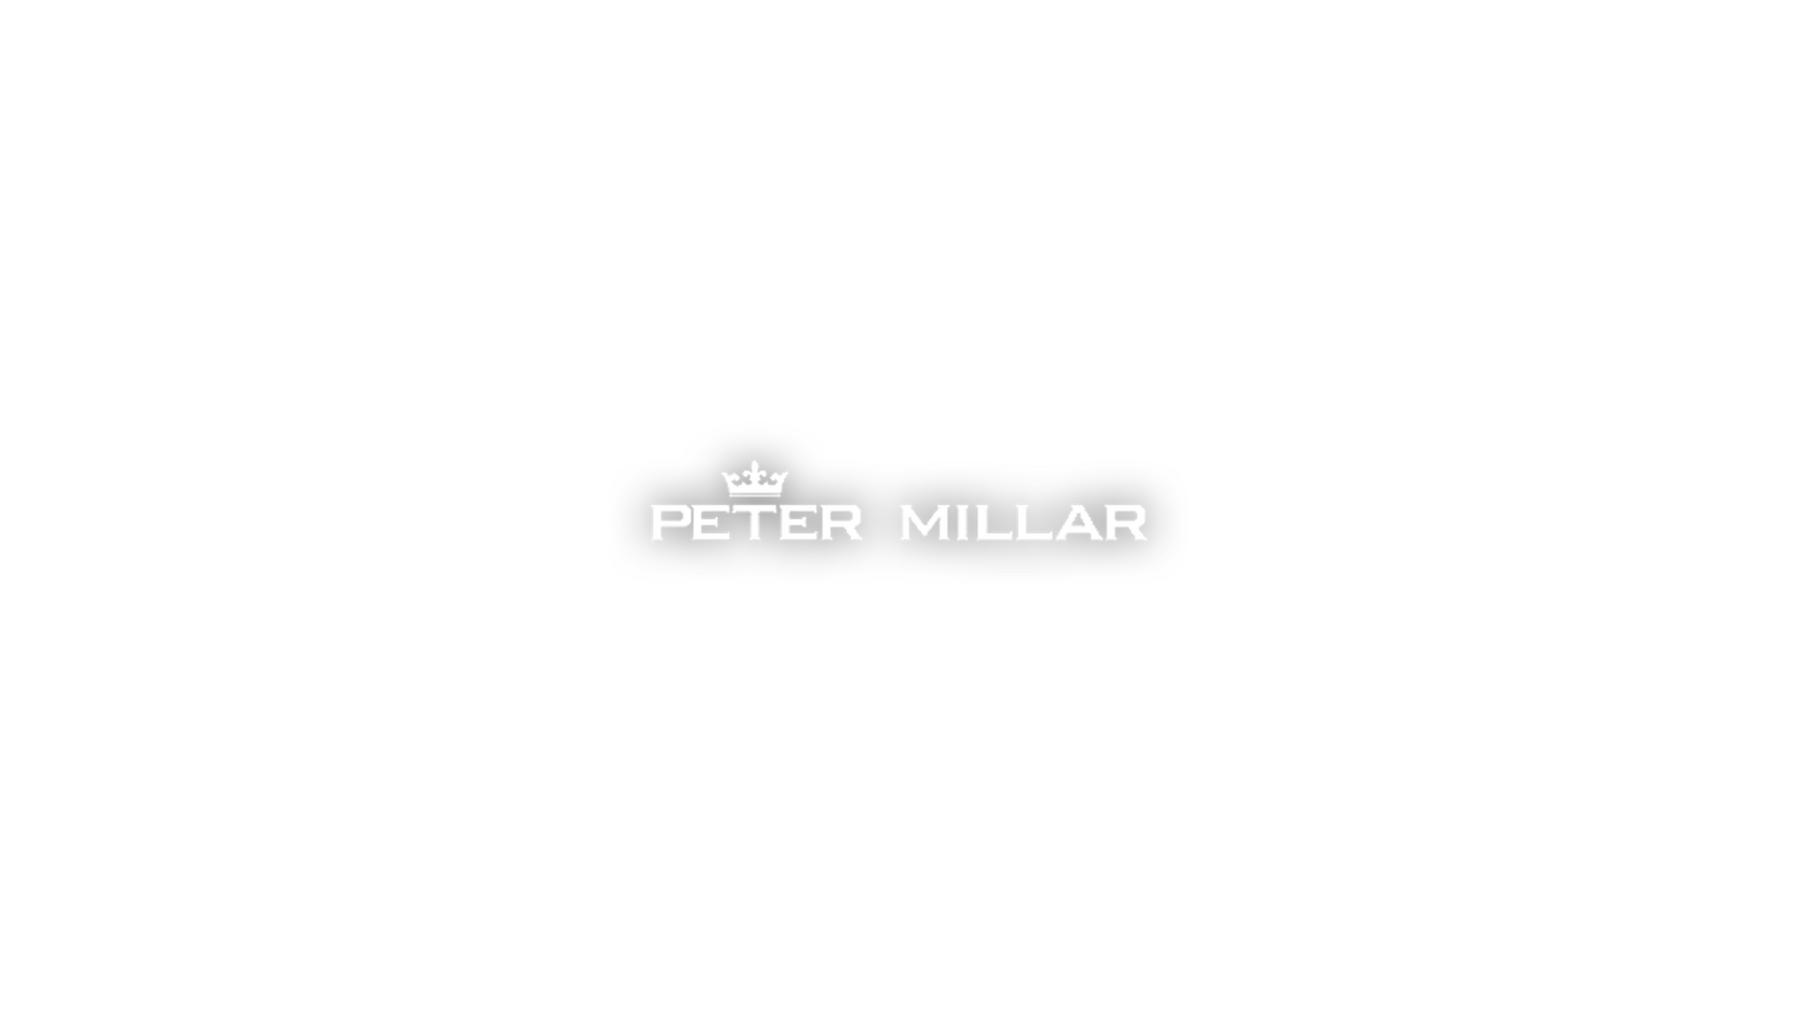 Peter millar logo center